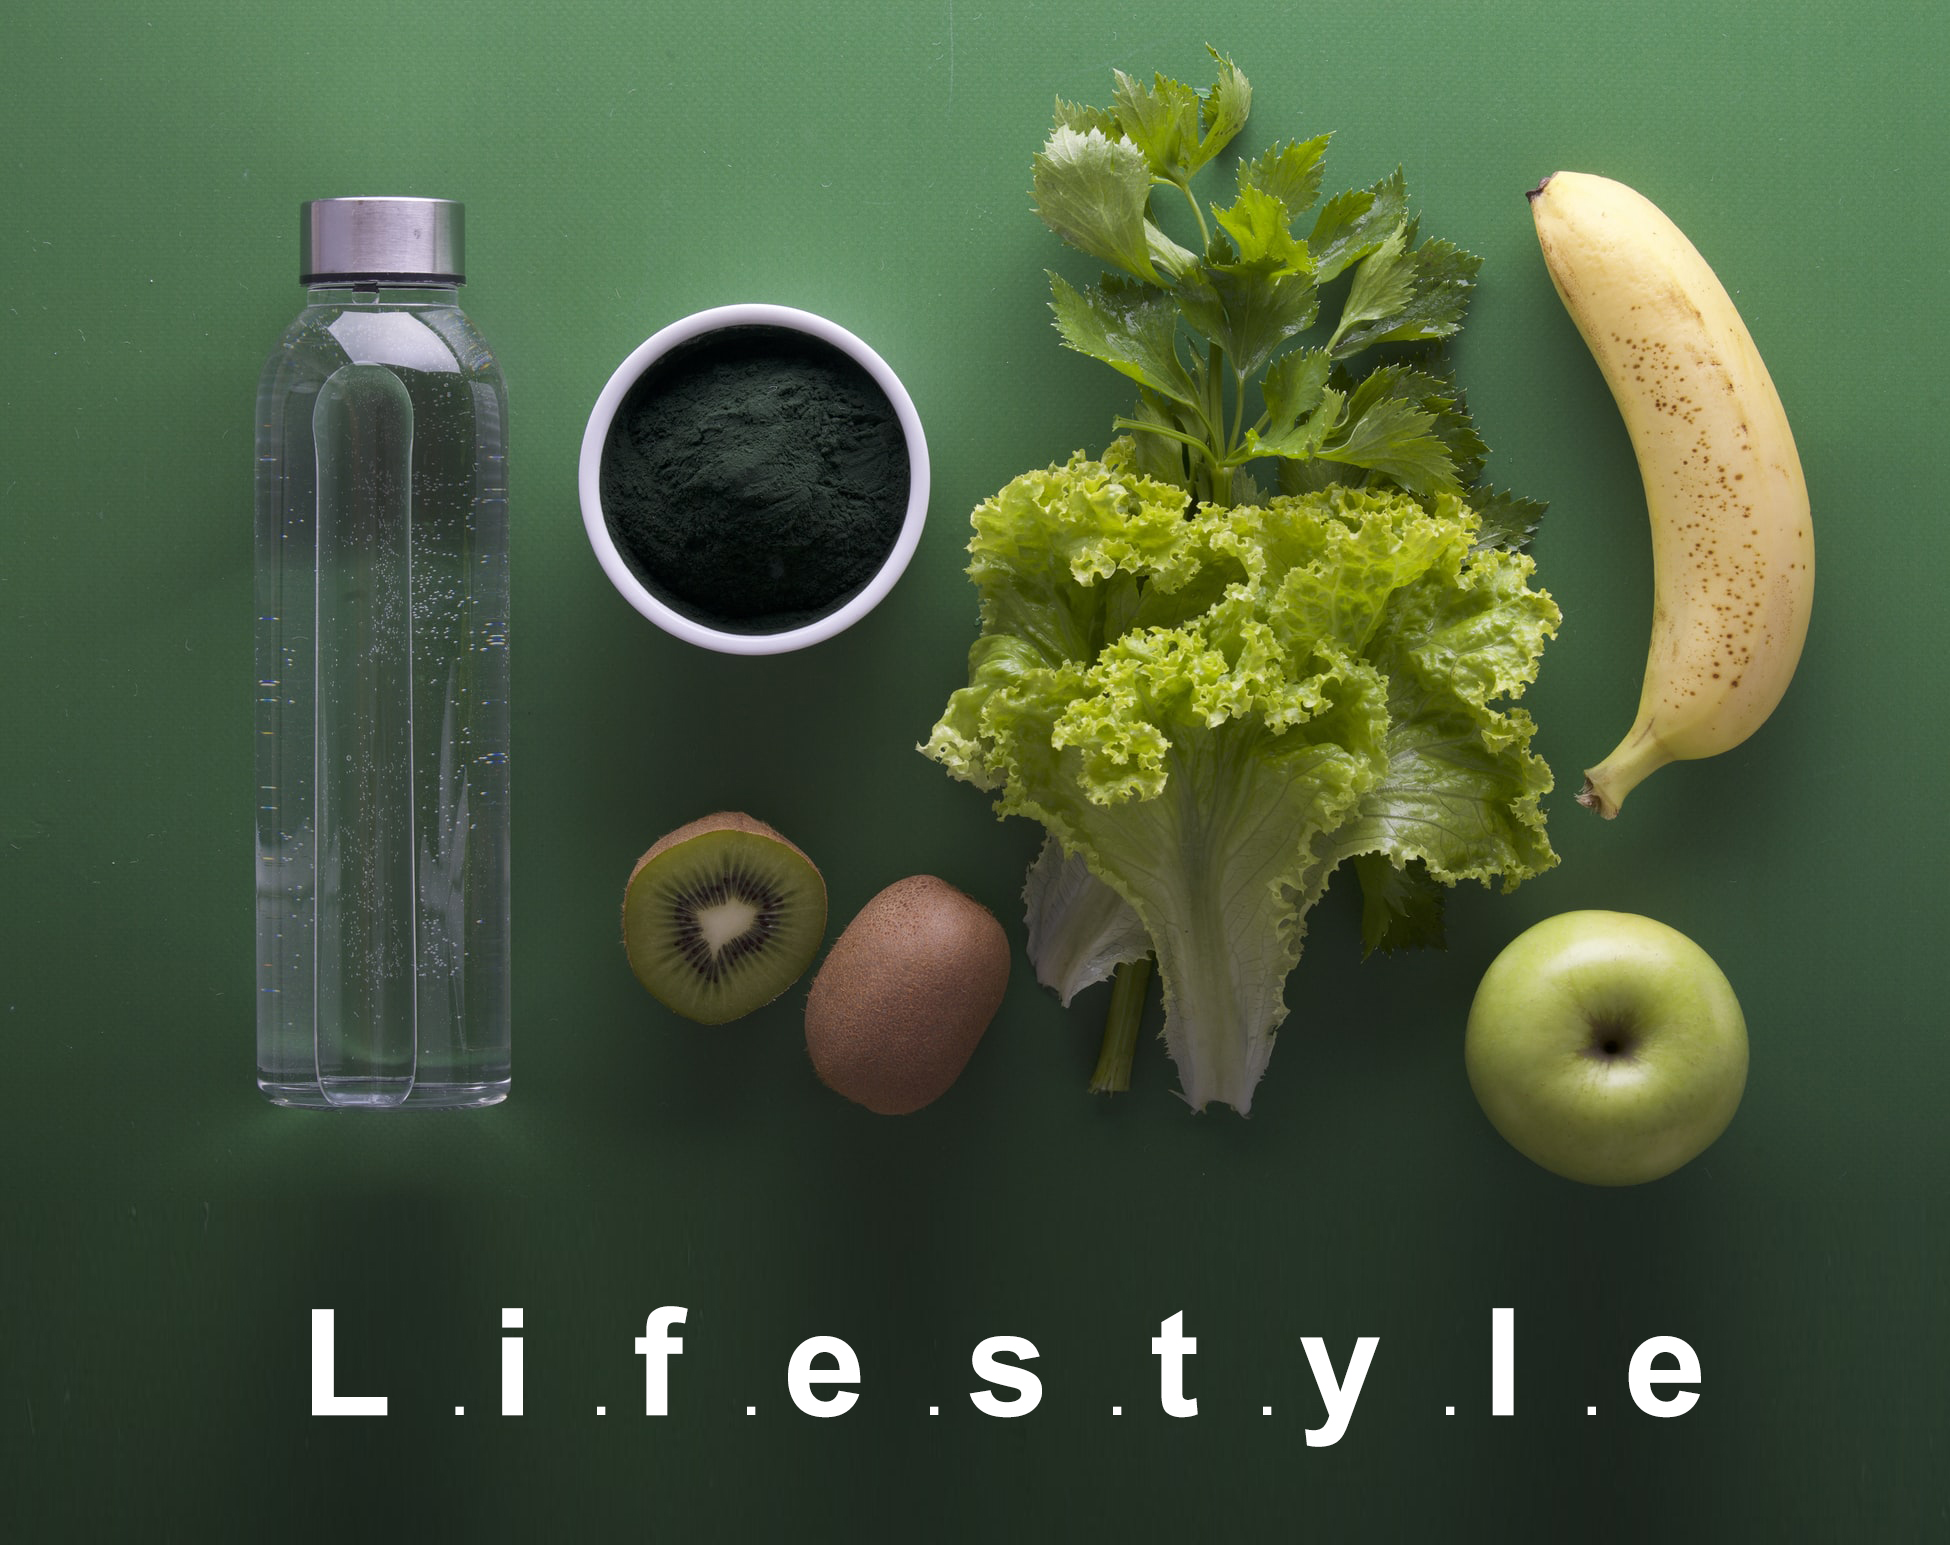 lifestyle-سلامتی-سلامت-تندرستی-تغذیه-ایران-ویتامین-ث-طب-مشاوره-طبیعت-زندگی-درمان-رژیم-زندگی-پوست-کیفیت-مدرنتناسب-اندام-حال-خوب-انرژی-مثبت-2 Home